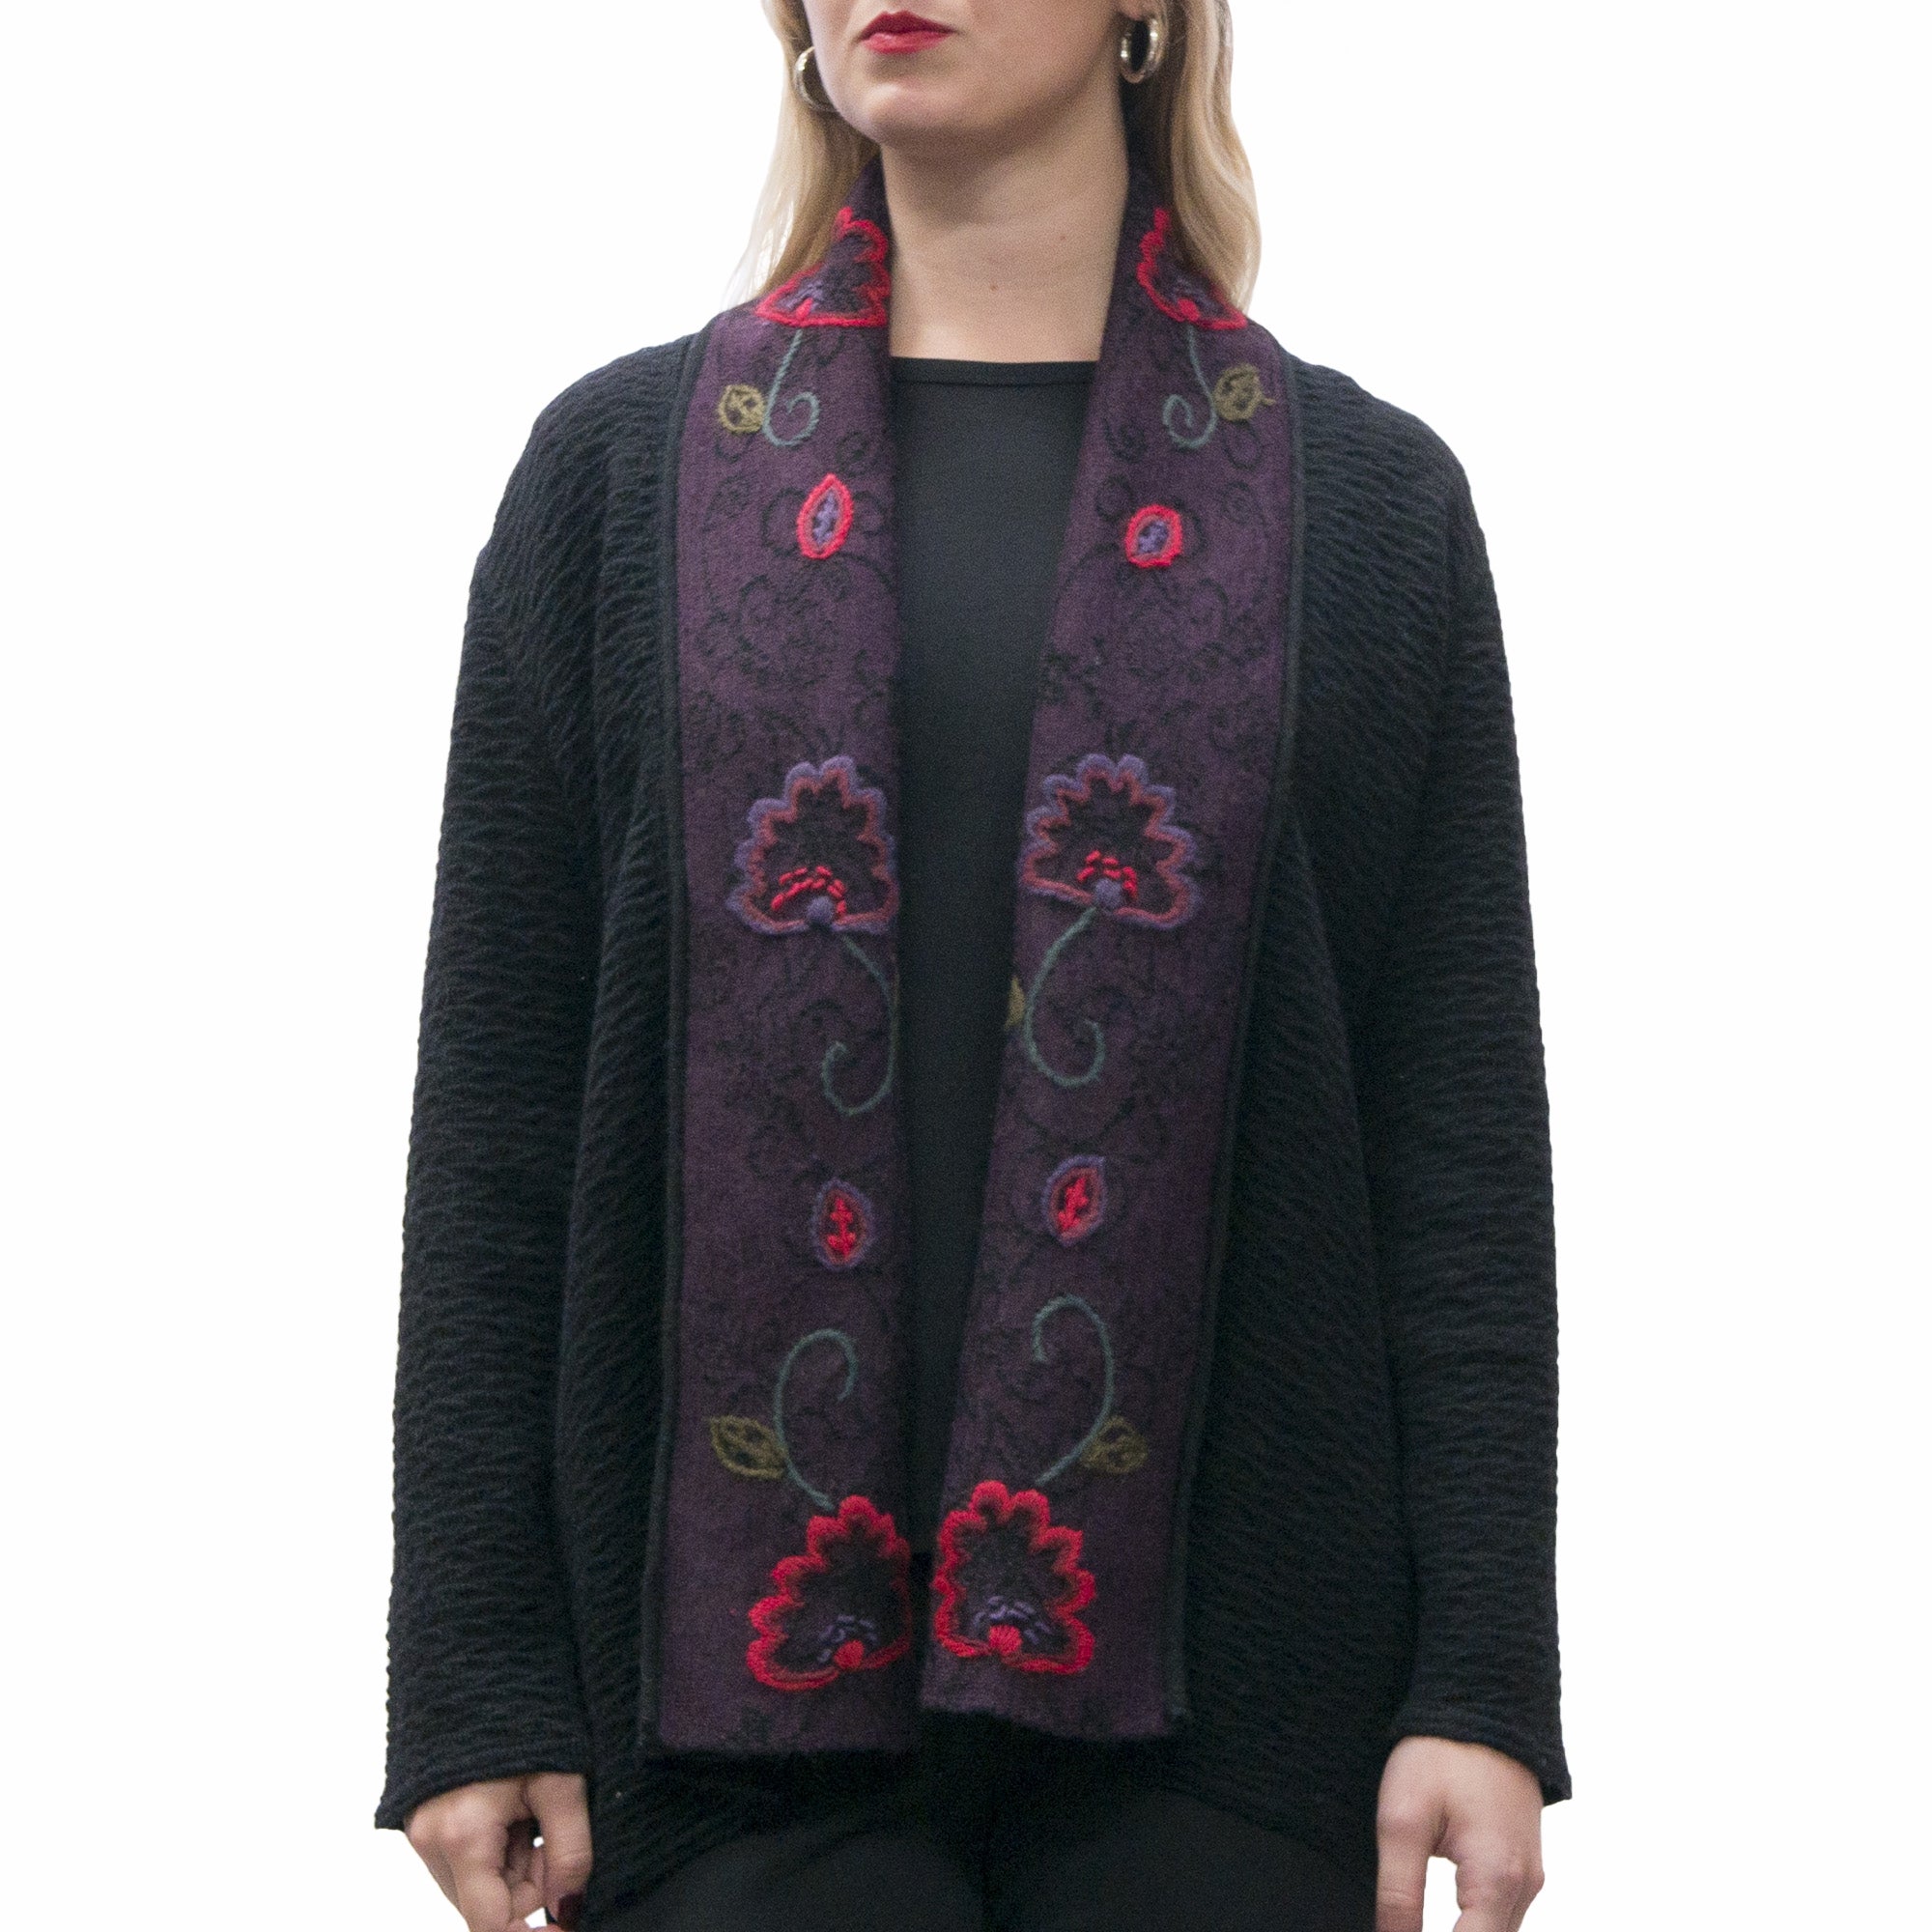 Beautiful Handmade Women's Luxury Jacket, Alpaca Wool 100%